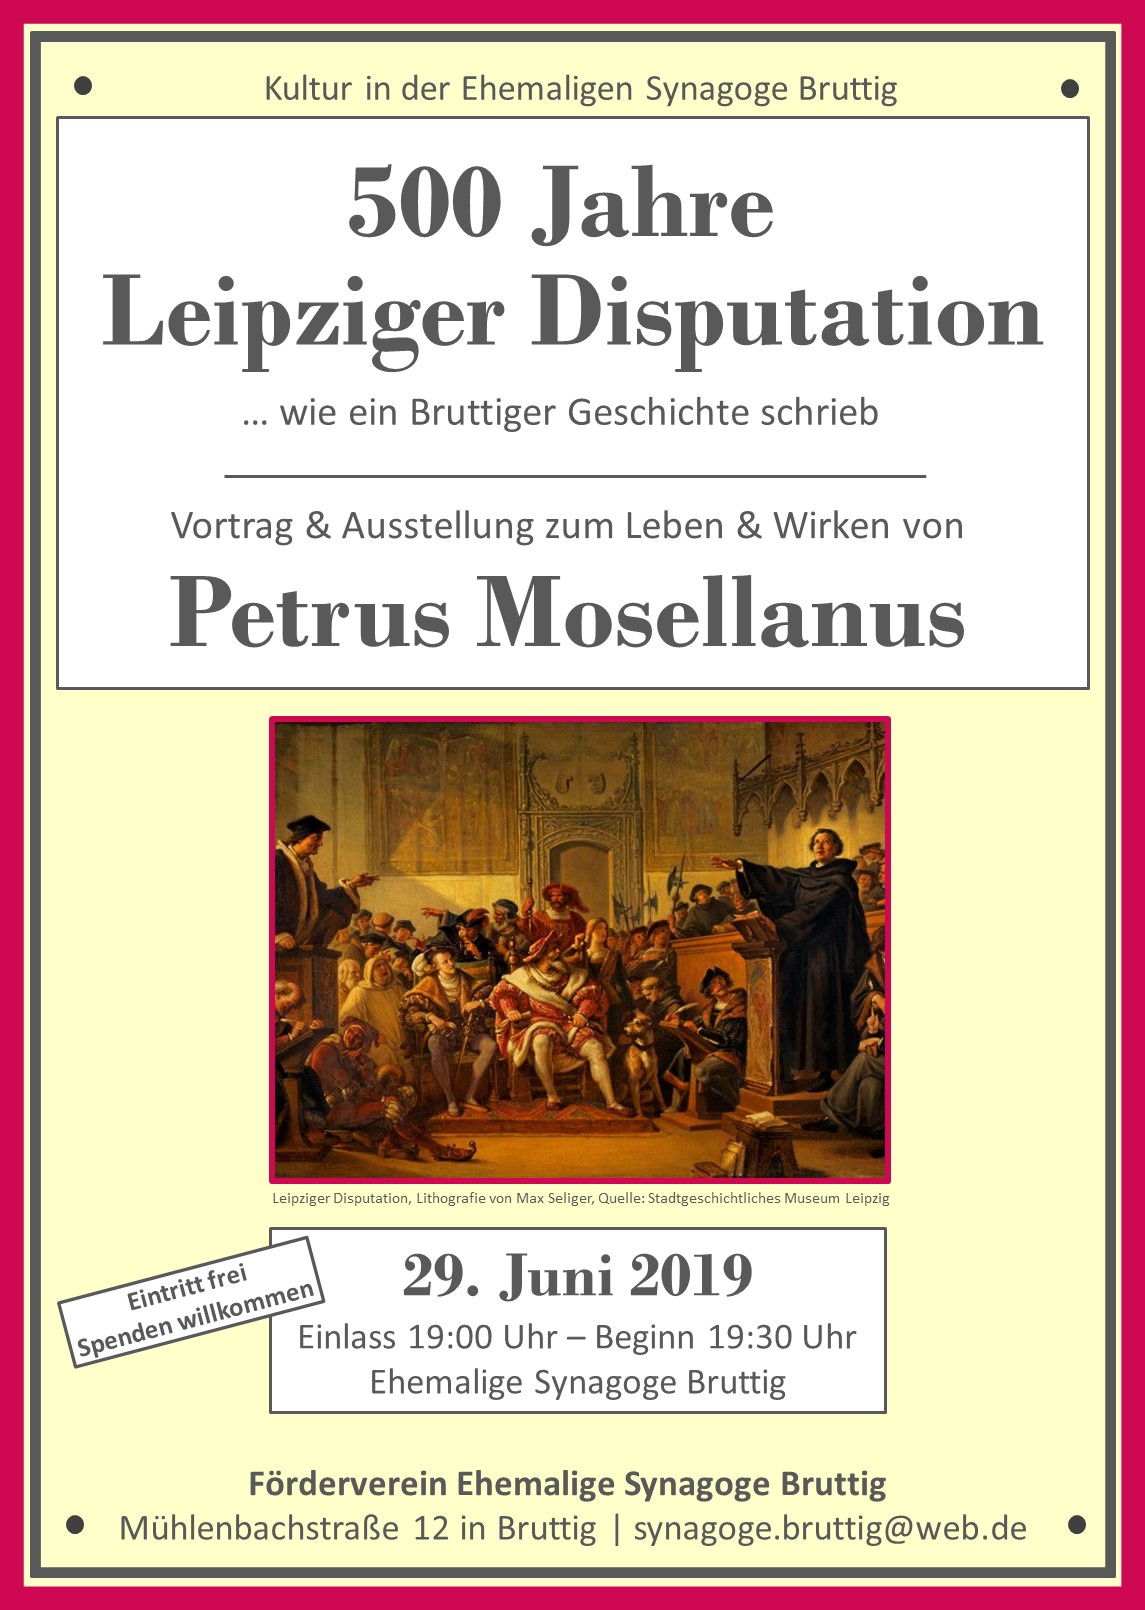 Synagoge Bruttig 500 Jahre Leipziger Disputation und Petrus Mosellanus 29.06.2019